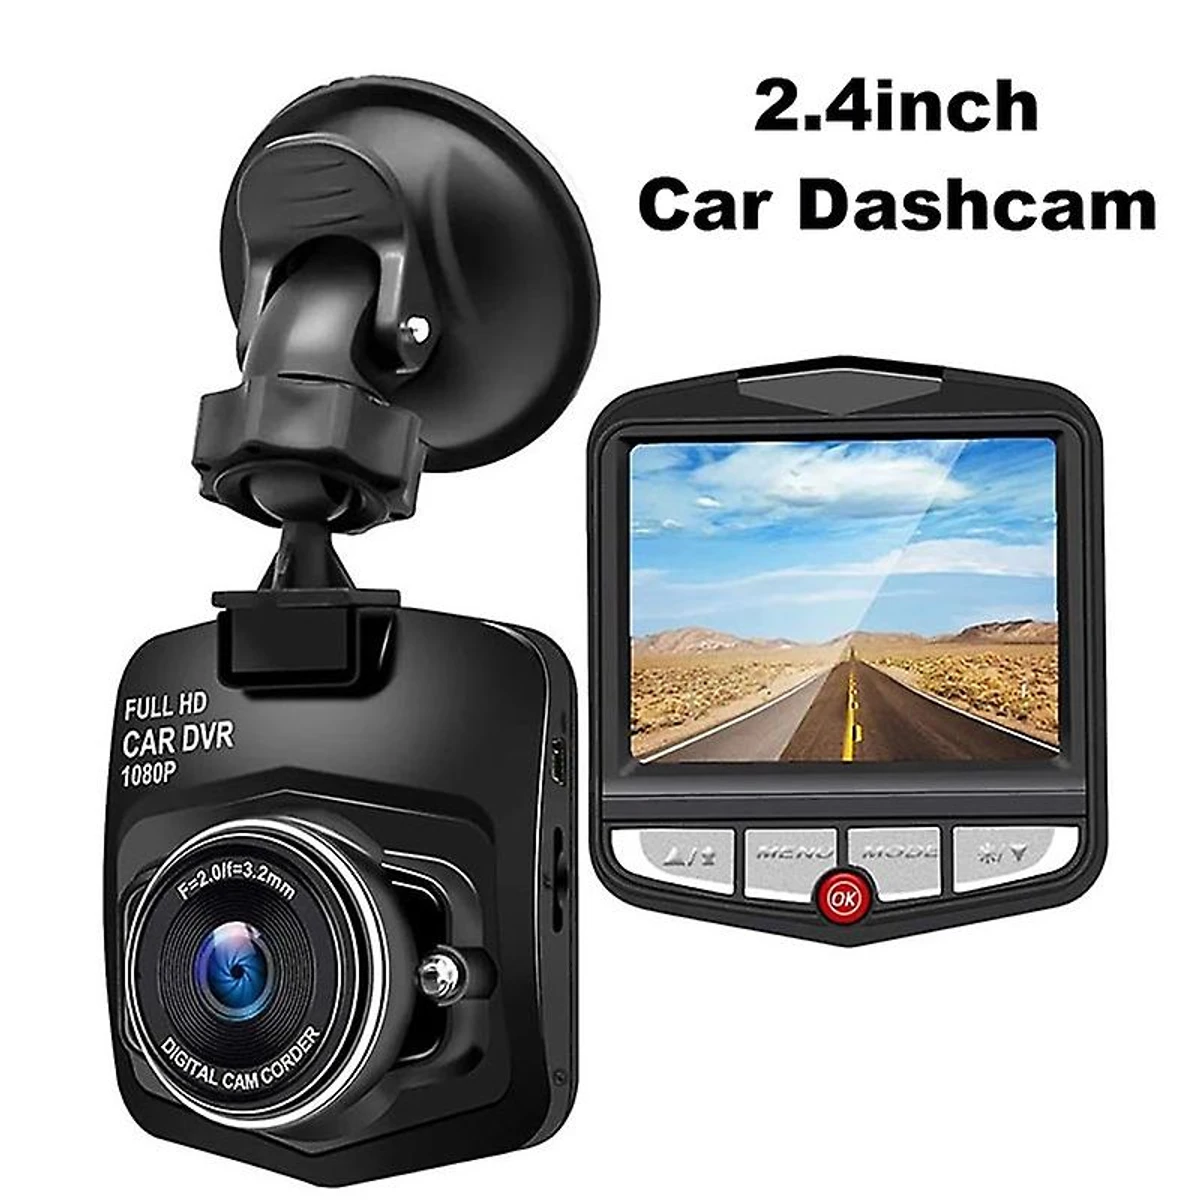 2.4 inch Car Dash Cam Vehicle Driver Video Recorder Portable DVR View Camera Black Box Auto Dashcam Loop Recording Night Vision